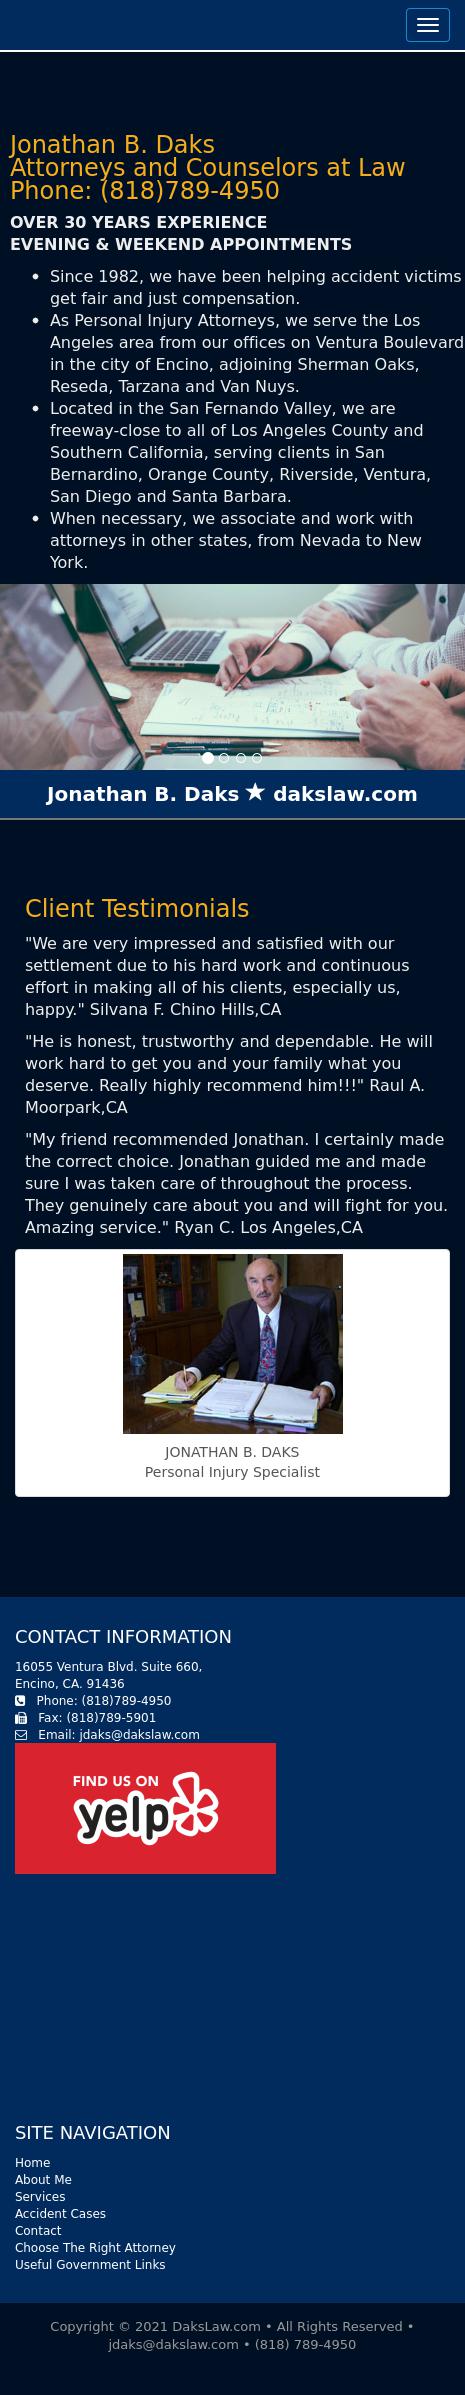 Jonathan B. Daks Auto Accidents & Personal Injury Attorneys - Encino CA Lawyers